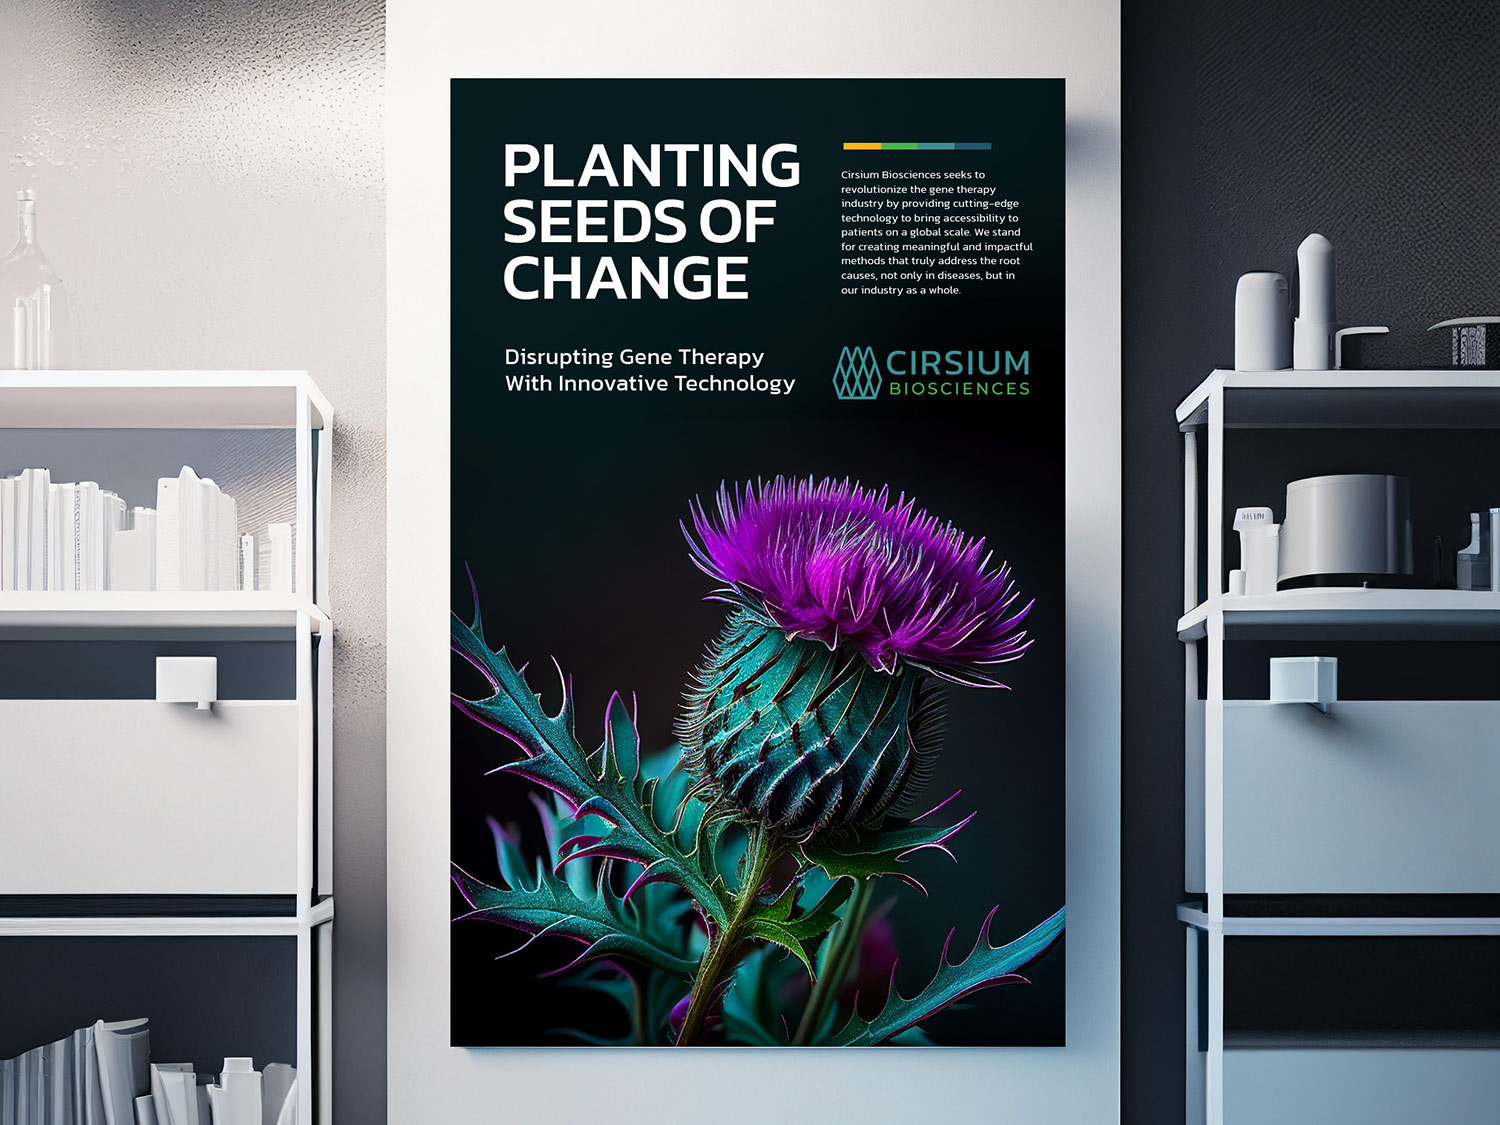 Cirsium Biosciences Brand identity on poster